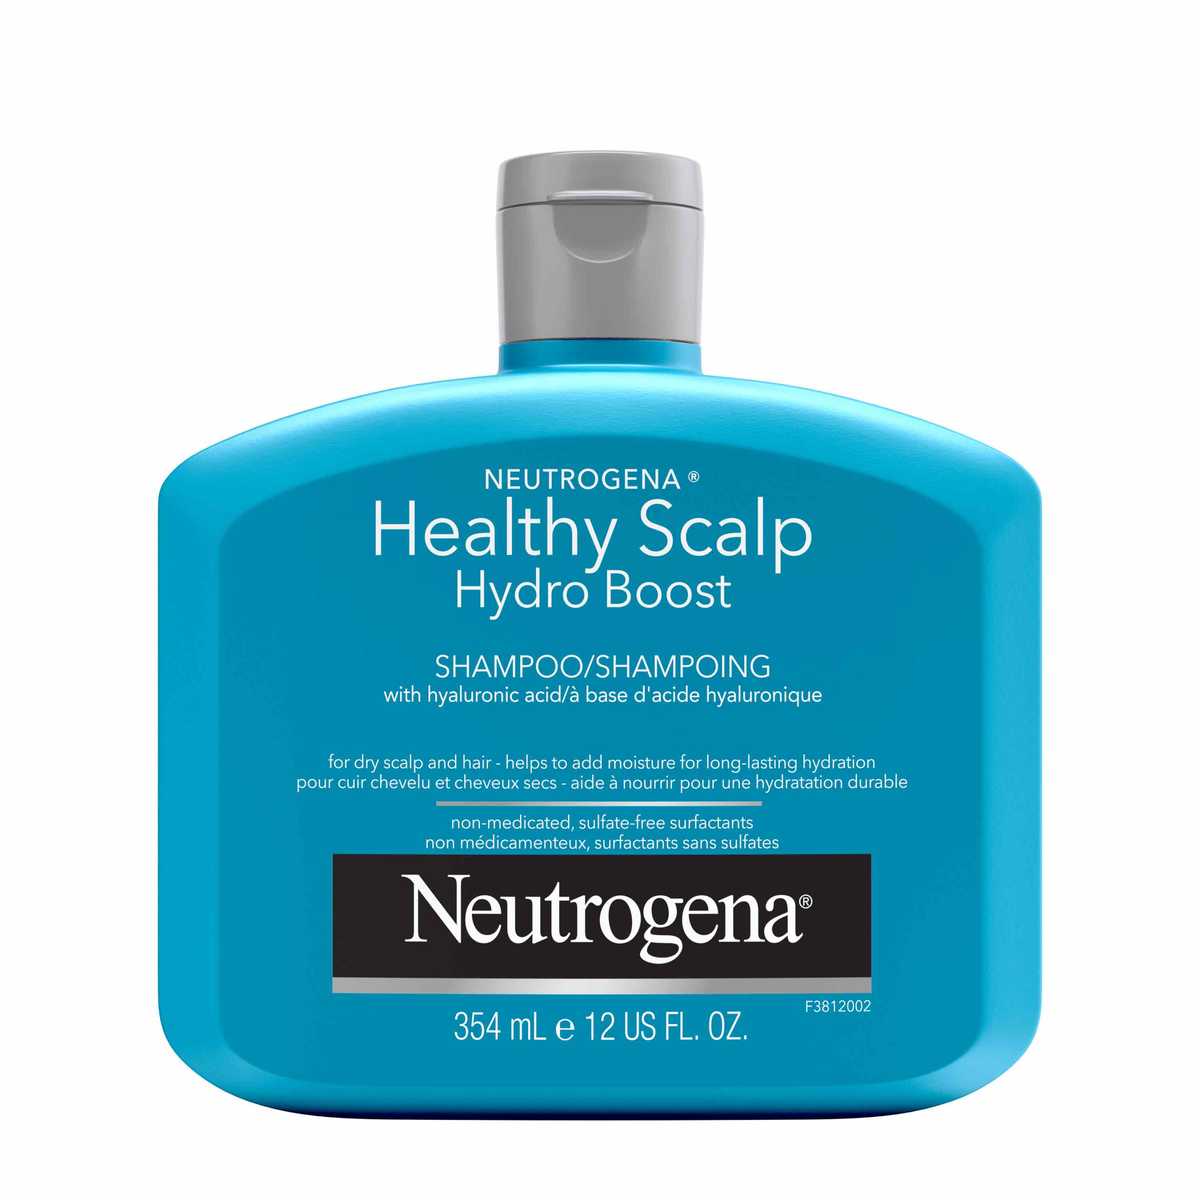 NEUTROGENA® Healthy Scalp Hydro Boost Moisturizing Shampoo bottle, 354mL